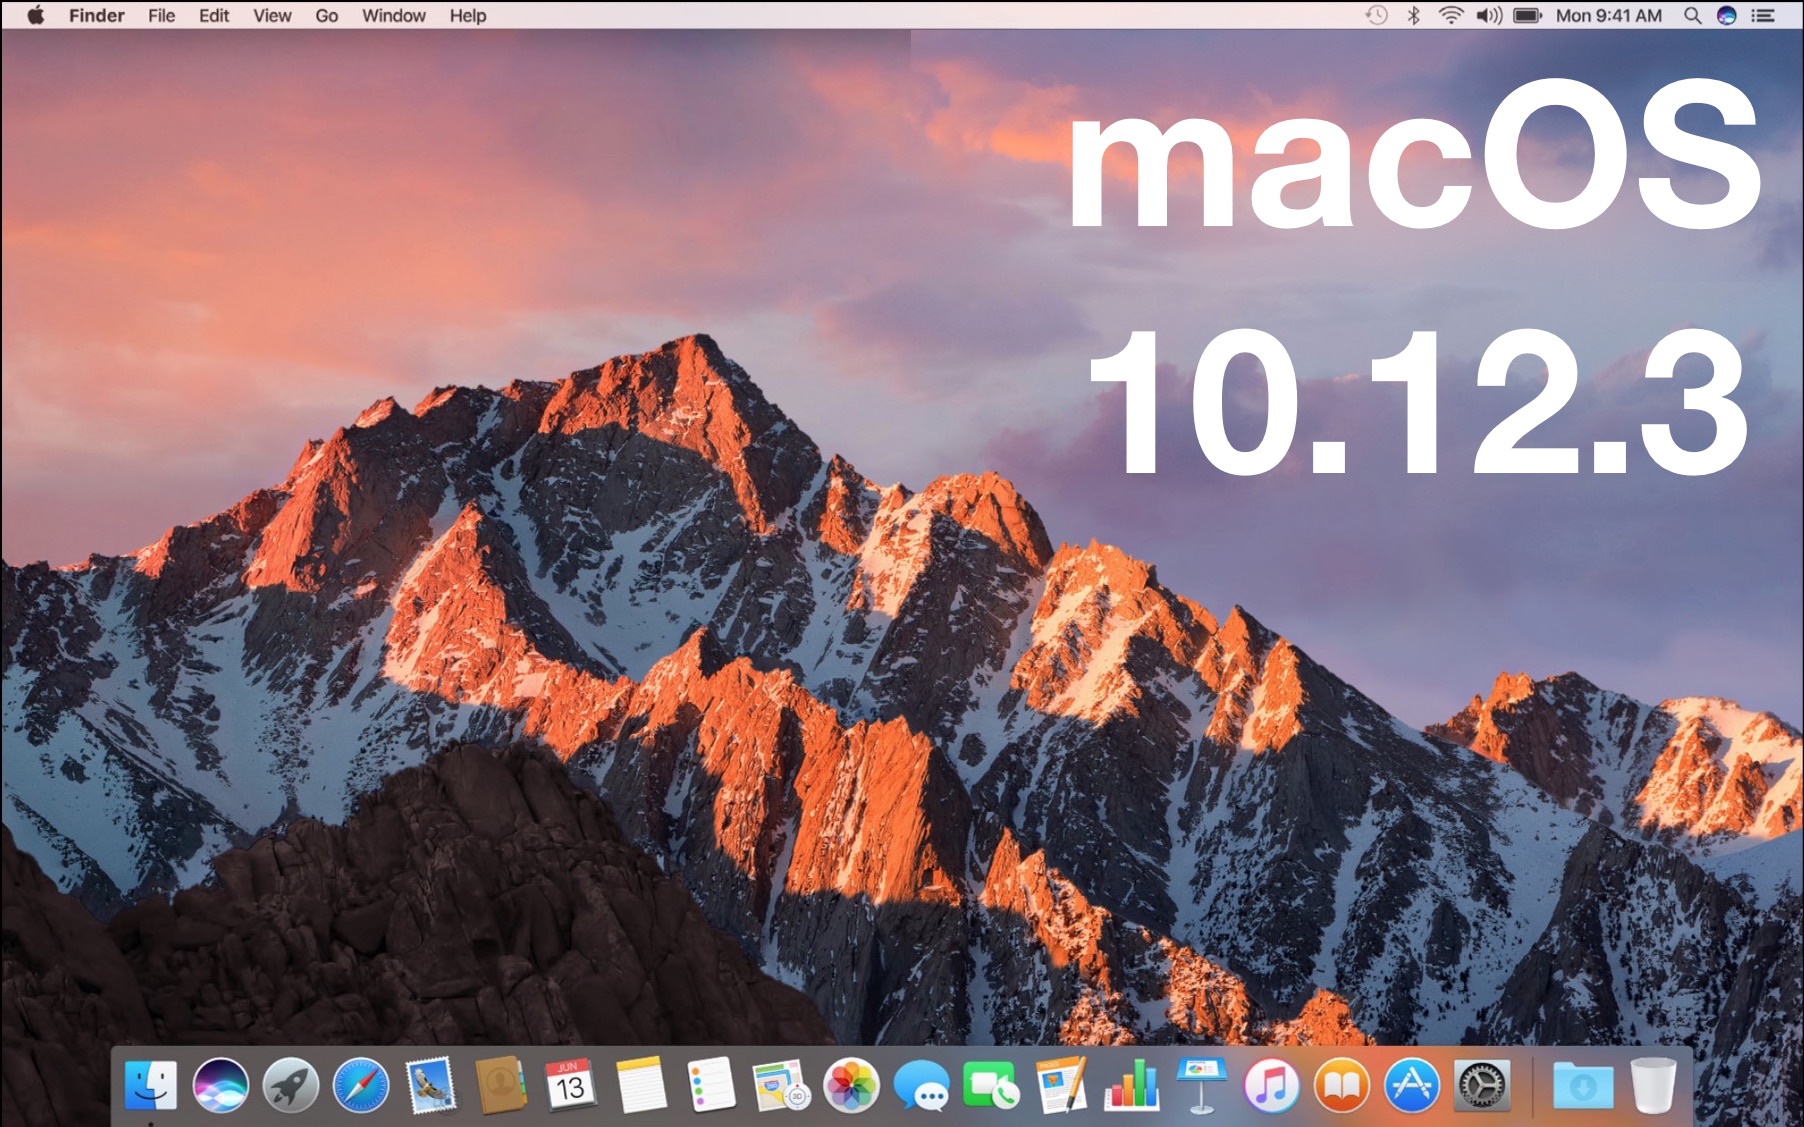 imovie download for mac sierra